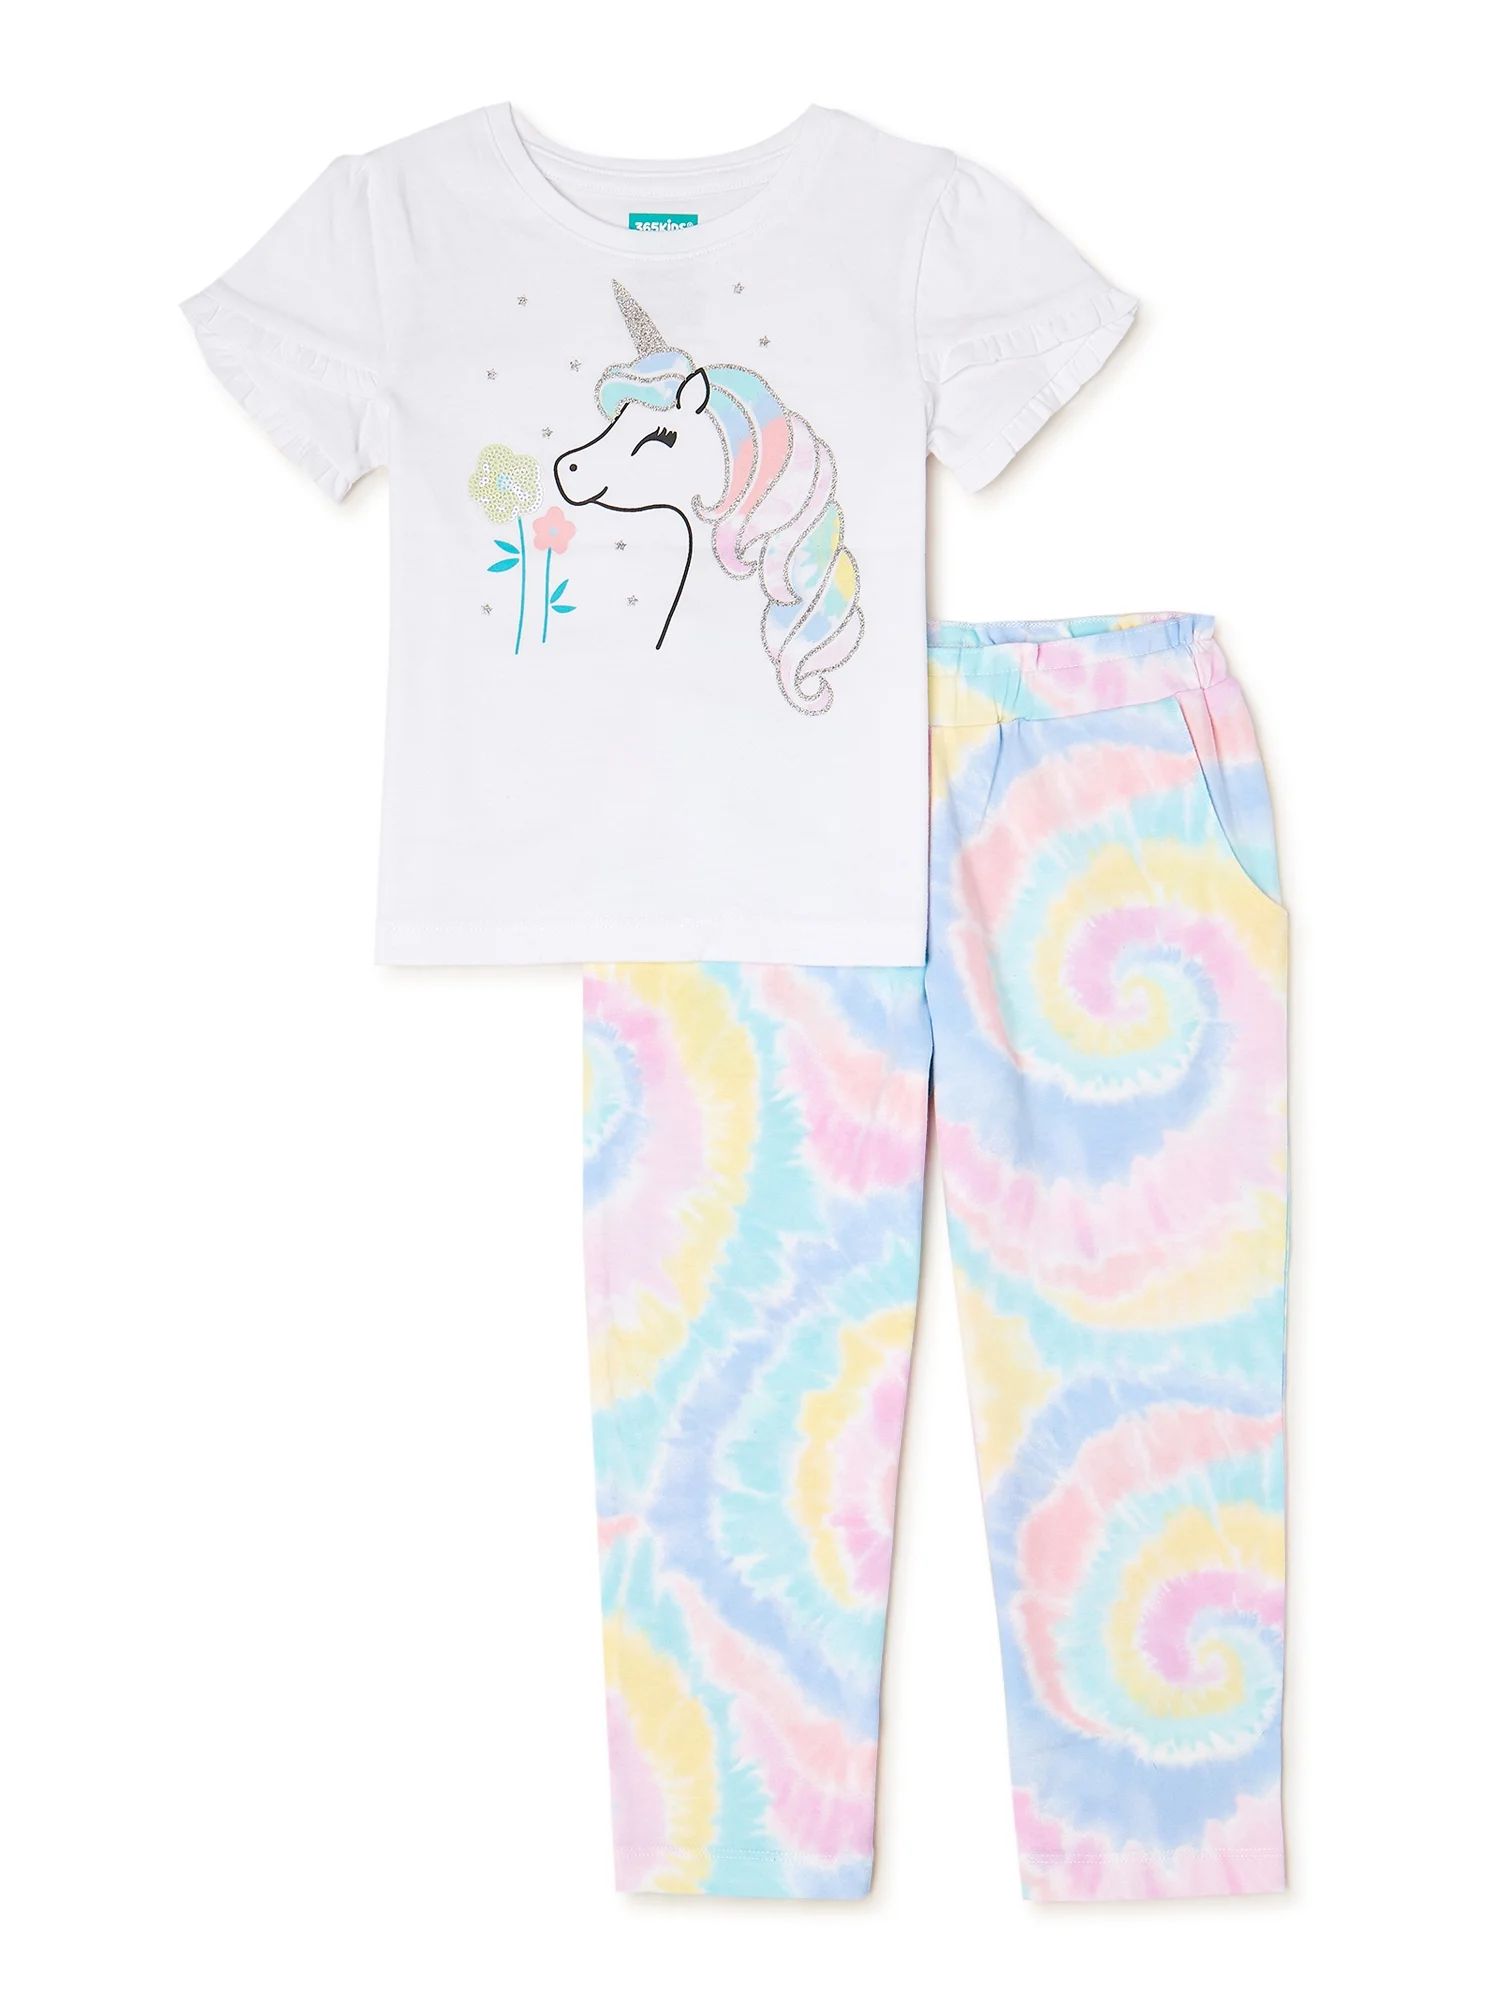 365 Kids From Garanimals Girls Ruffle Sleeve T-Shirt and Pants, 2-Piece Outfit Set, Sizes 4-10 | Walmart (US)